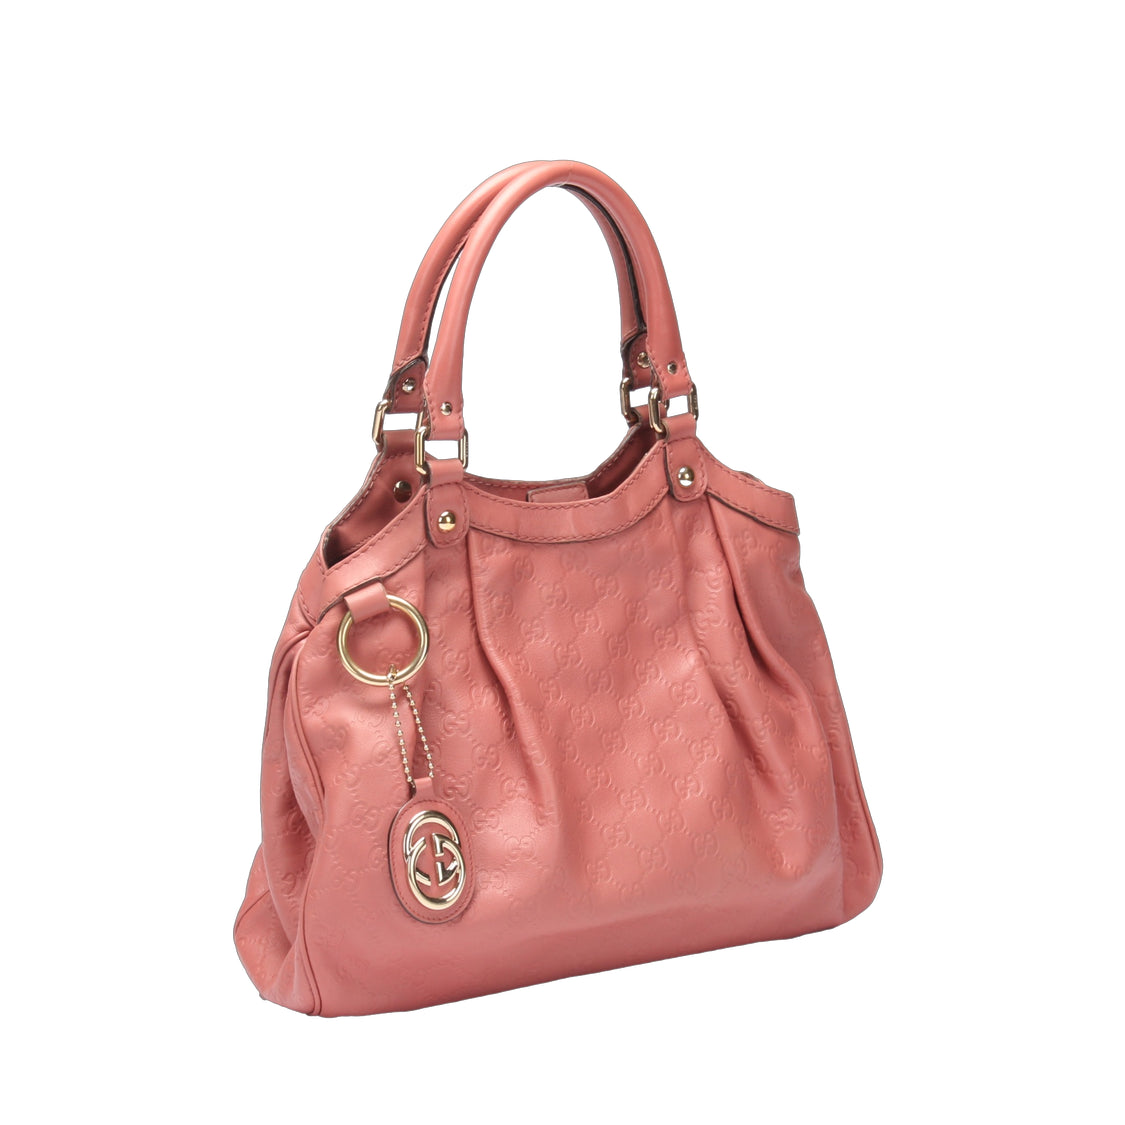 Guccissima Leather Sukey Handbag 211944